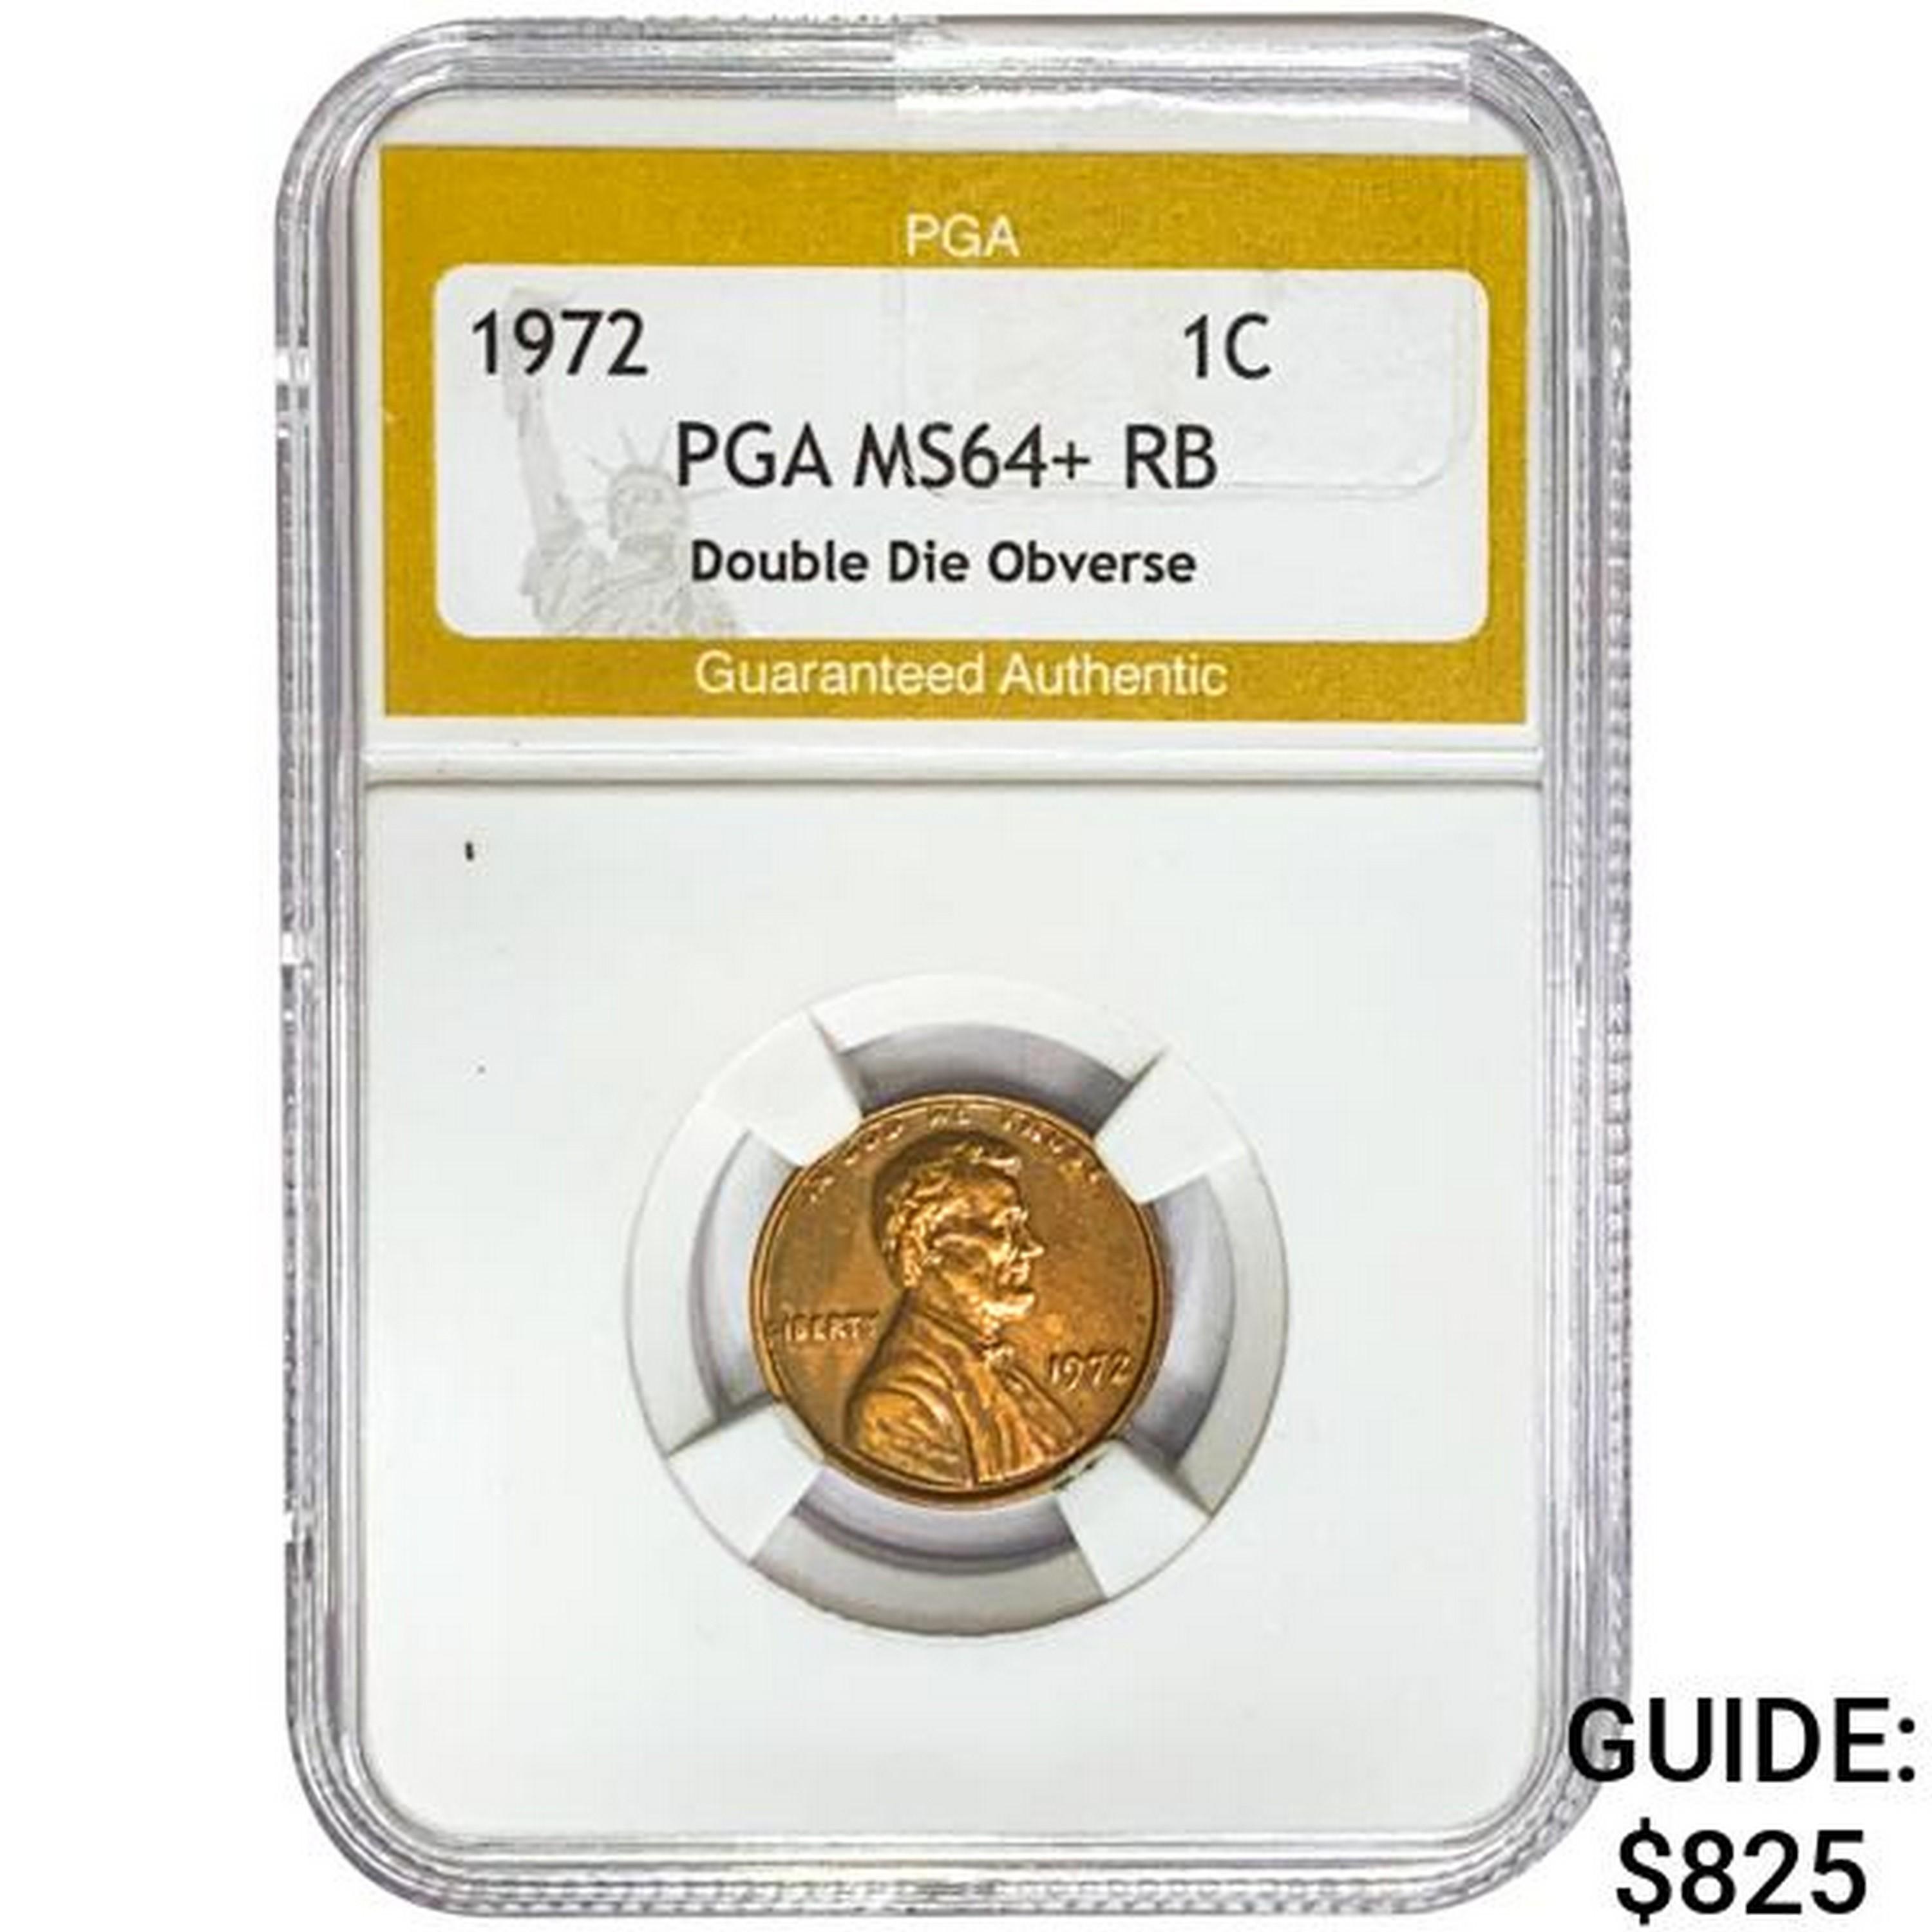 1972 Lincoln Memorial Cent PGA MS64+ RB DDO